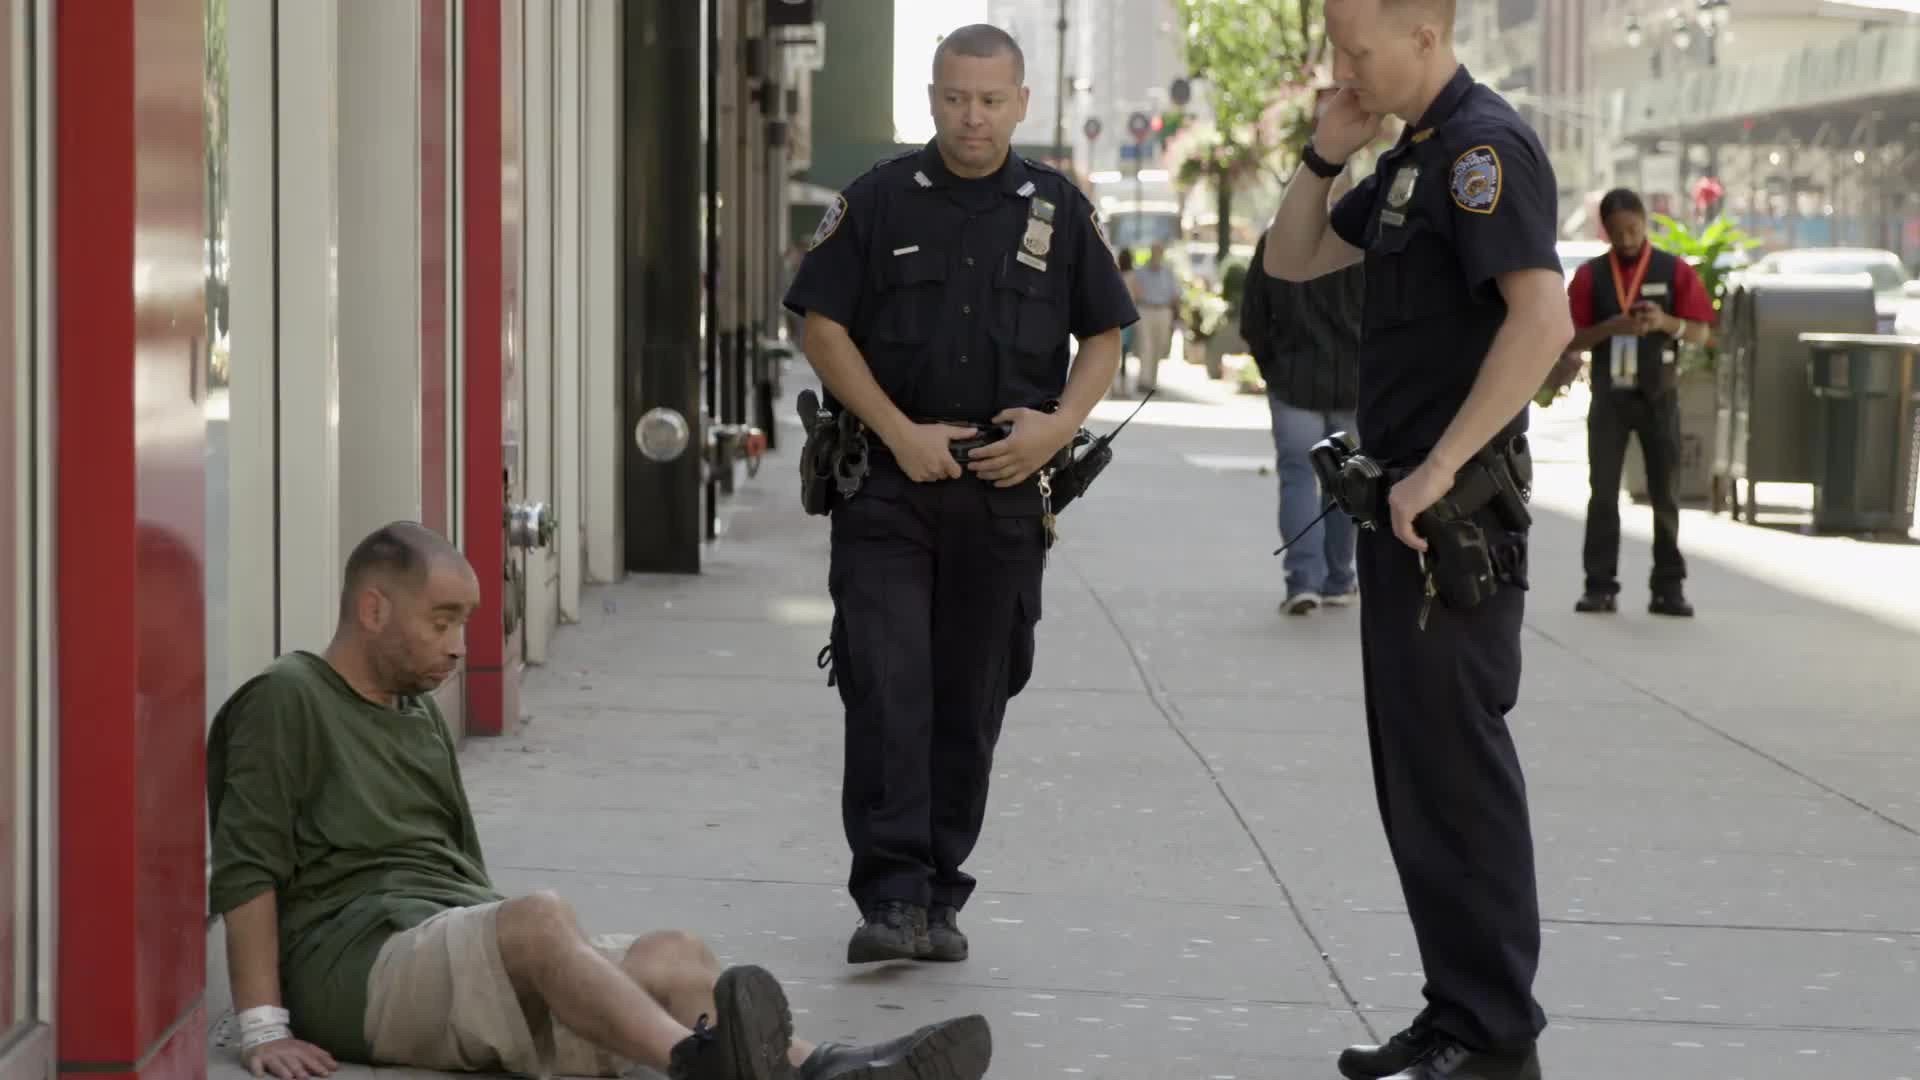 police standing over drunk man sitting on sidewalk in Midtown Manhattan on summer day in NYC